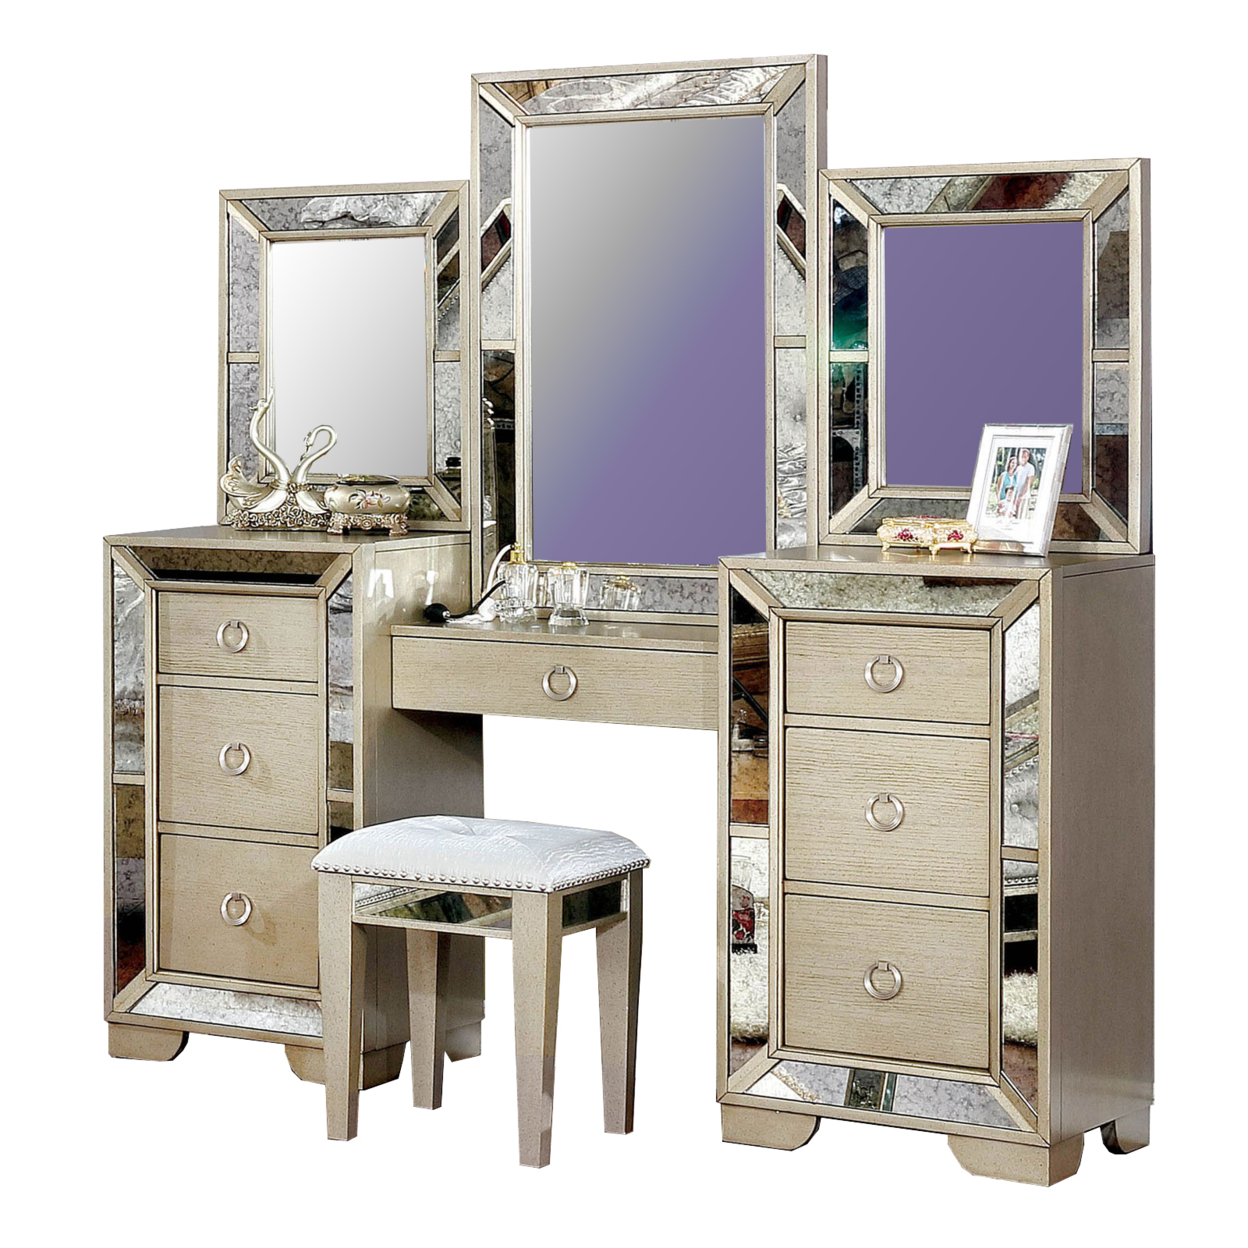 Wooden Vanity Set With Antique Mirror Details And Storage Drawers, Silver- Saltoro Sherpi